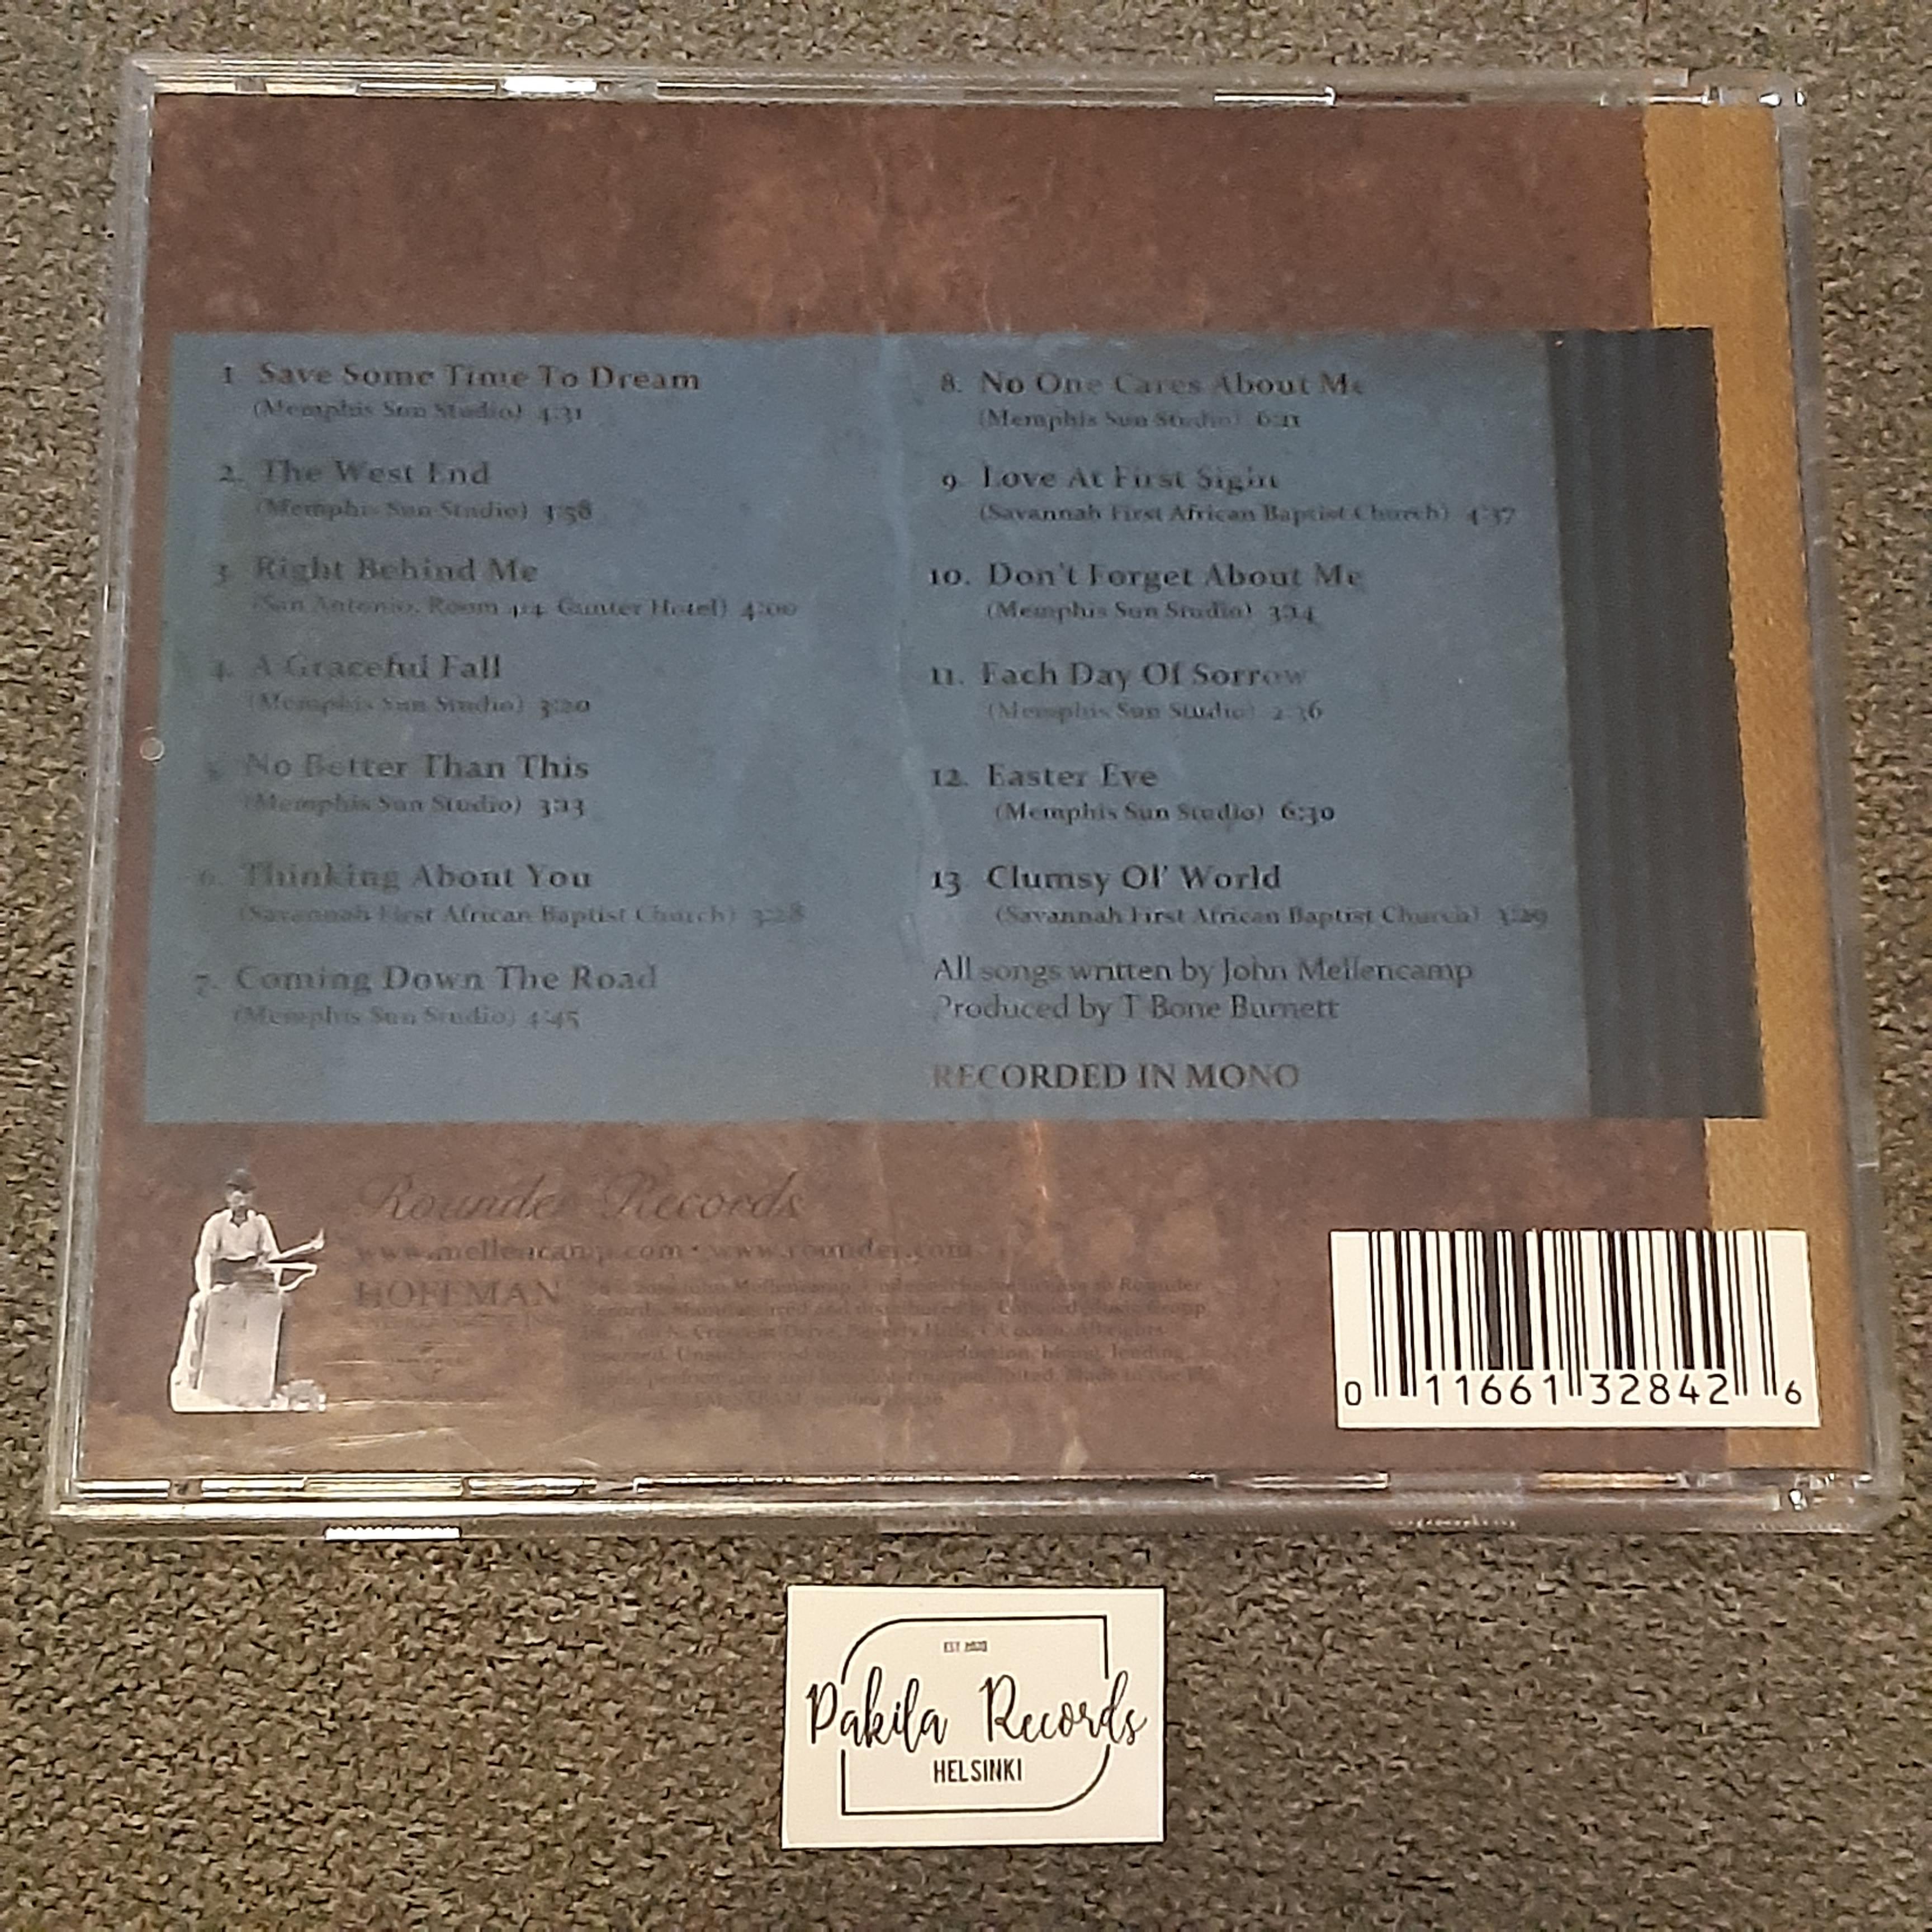 John Mellencamp - No Better Than This - CD (käytetty)